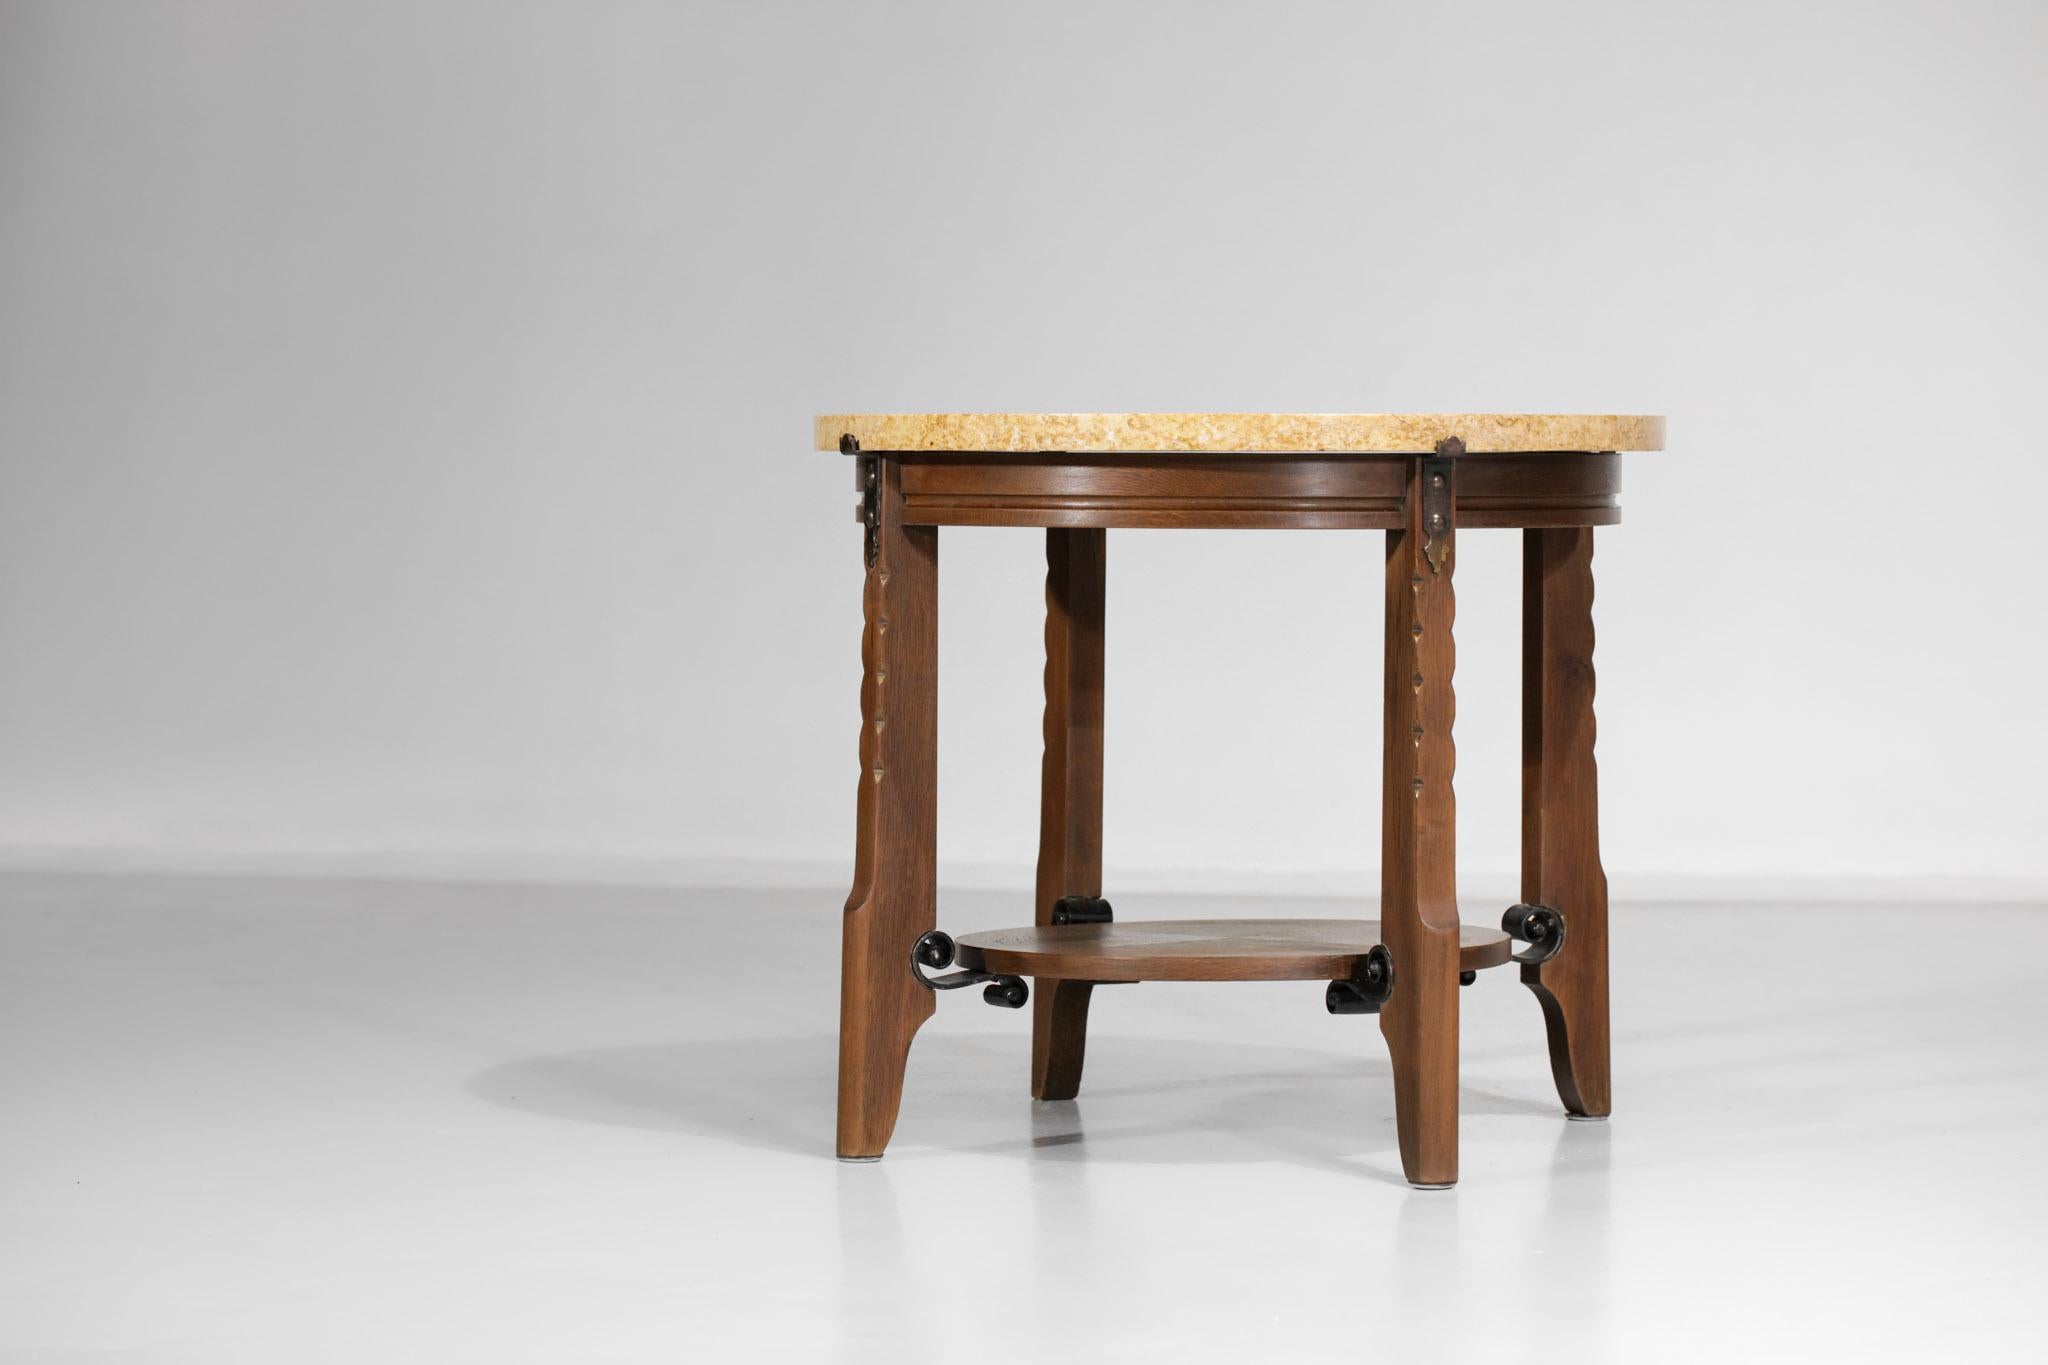 Oak and Travertine Art Deco Coffee Table 1930's Gueridon, E556 For Sale 2